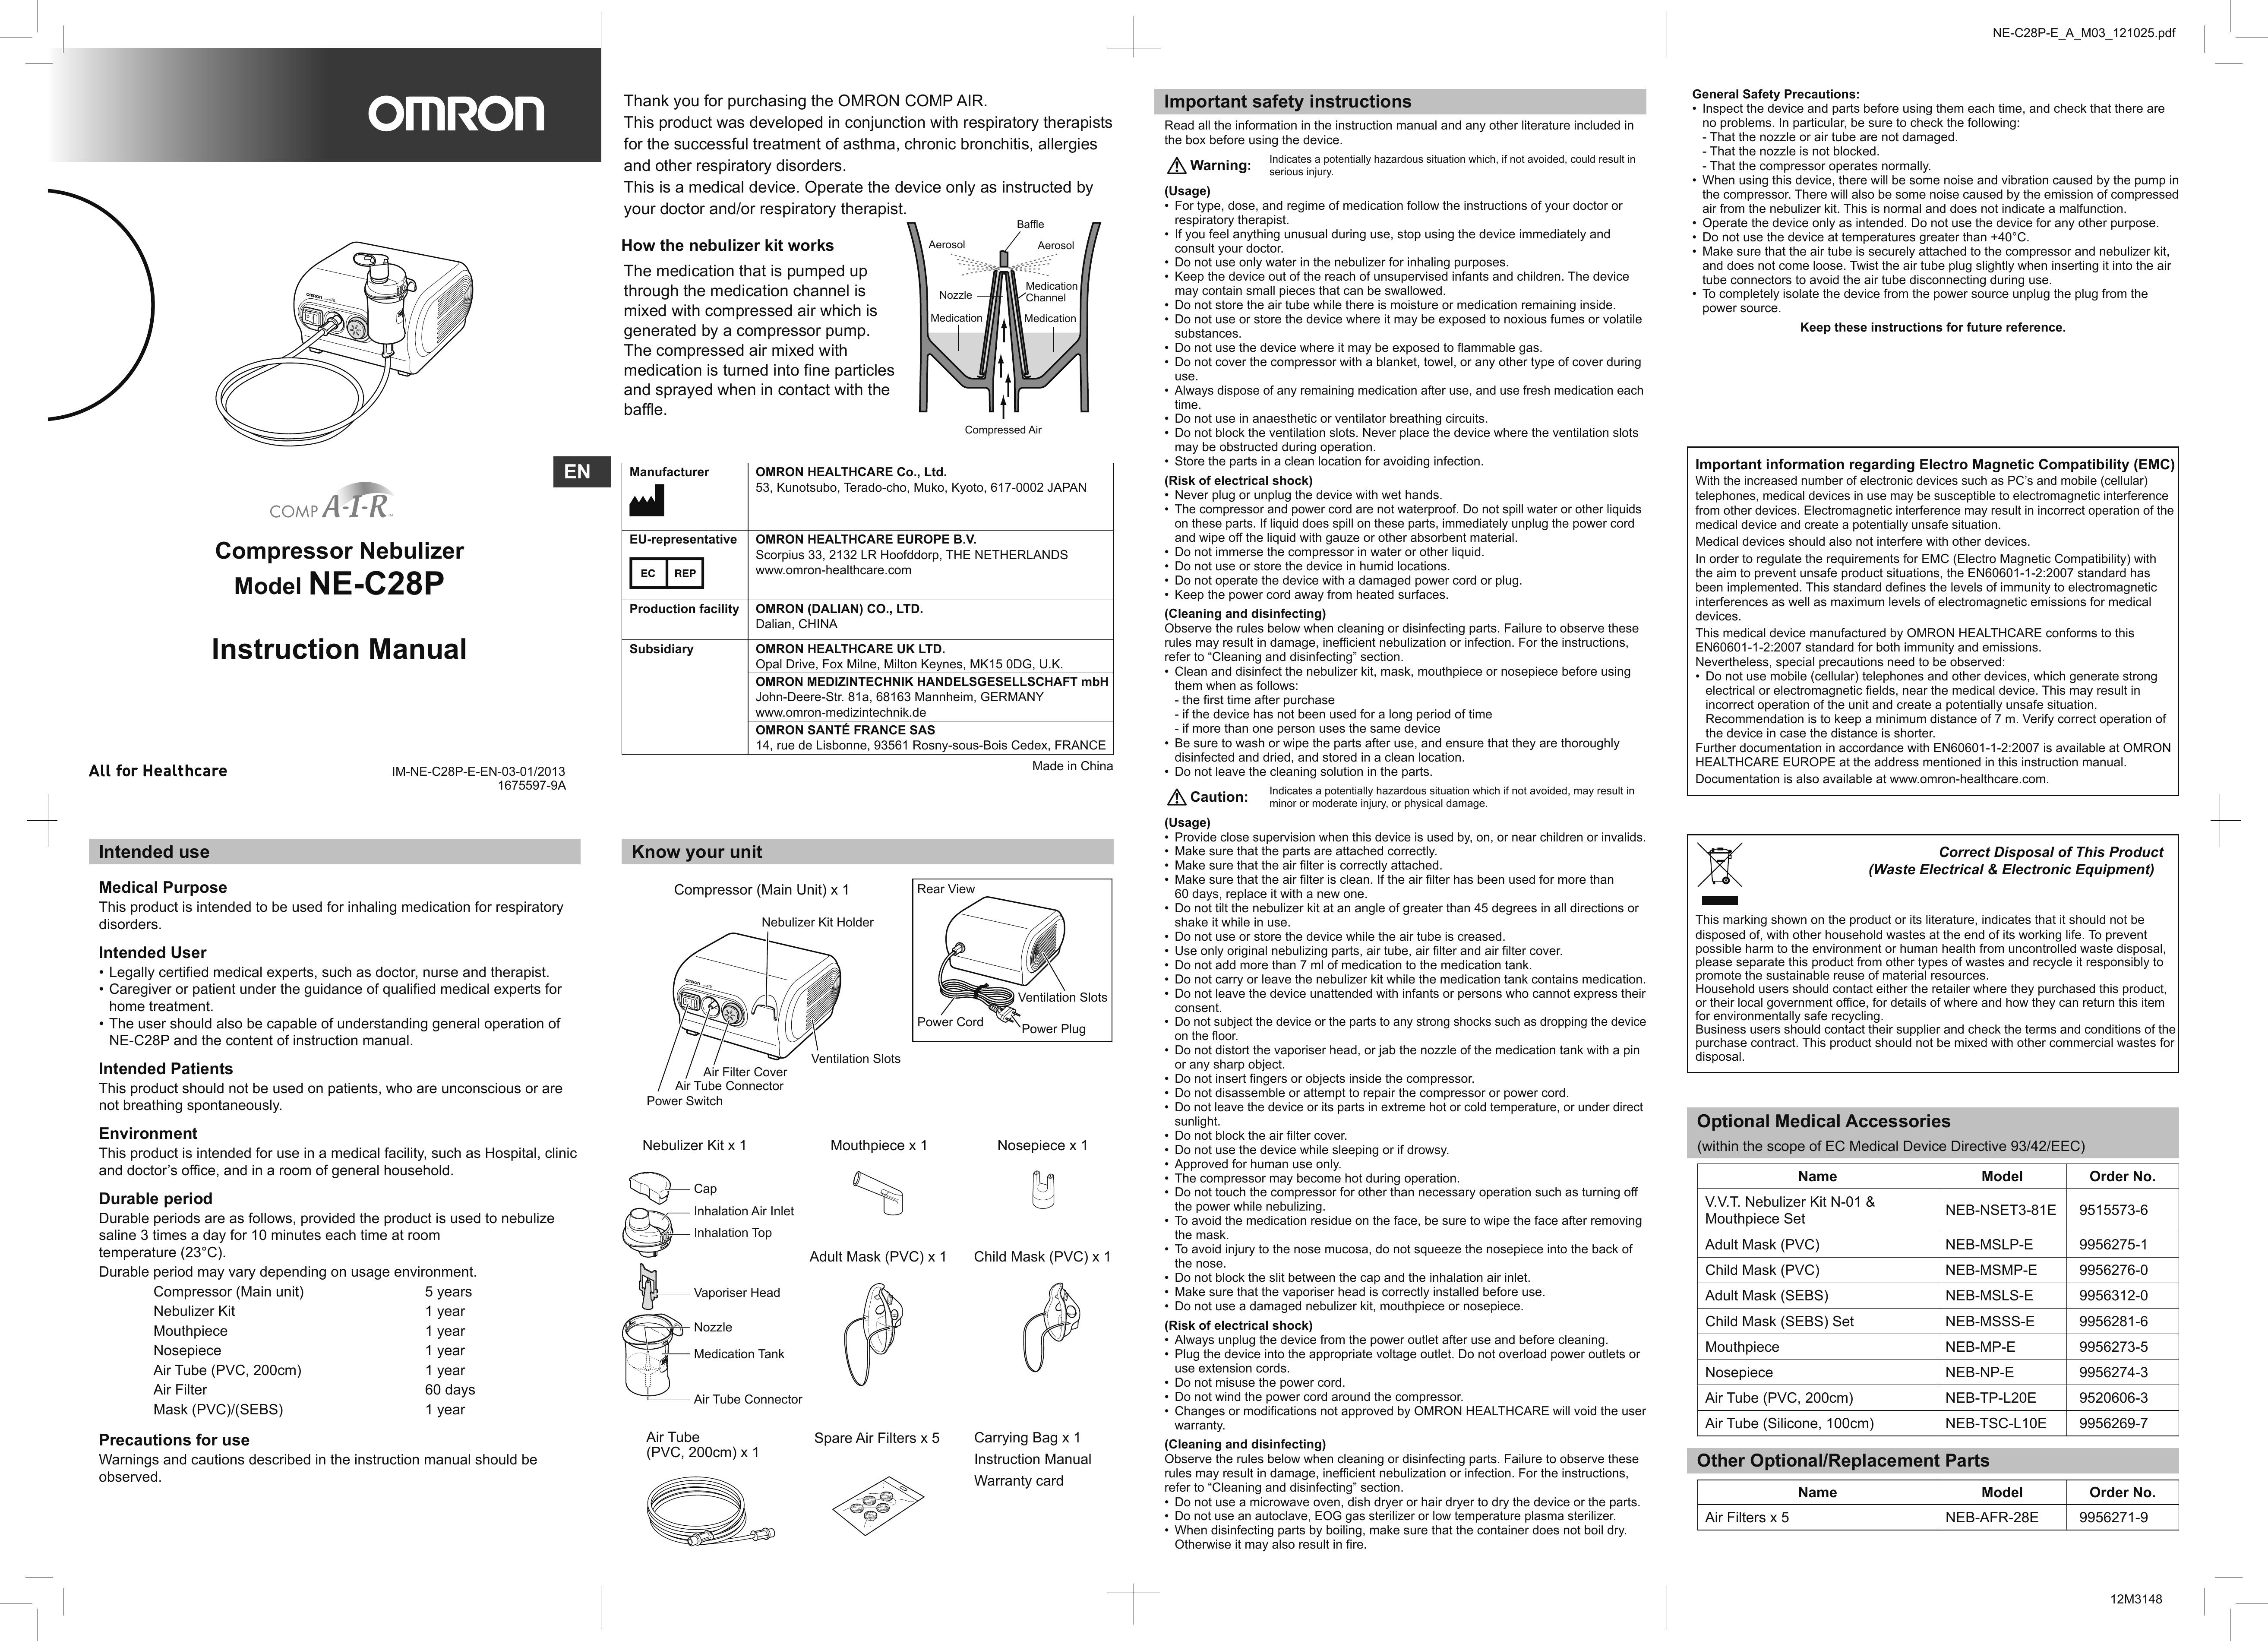 Omron ME-C28P Respiratory Product User Manual